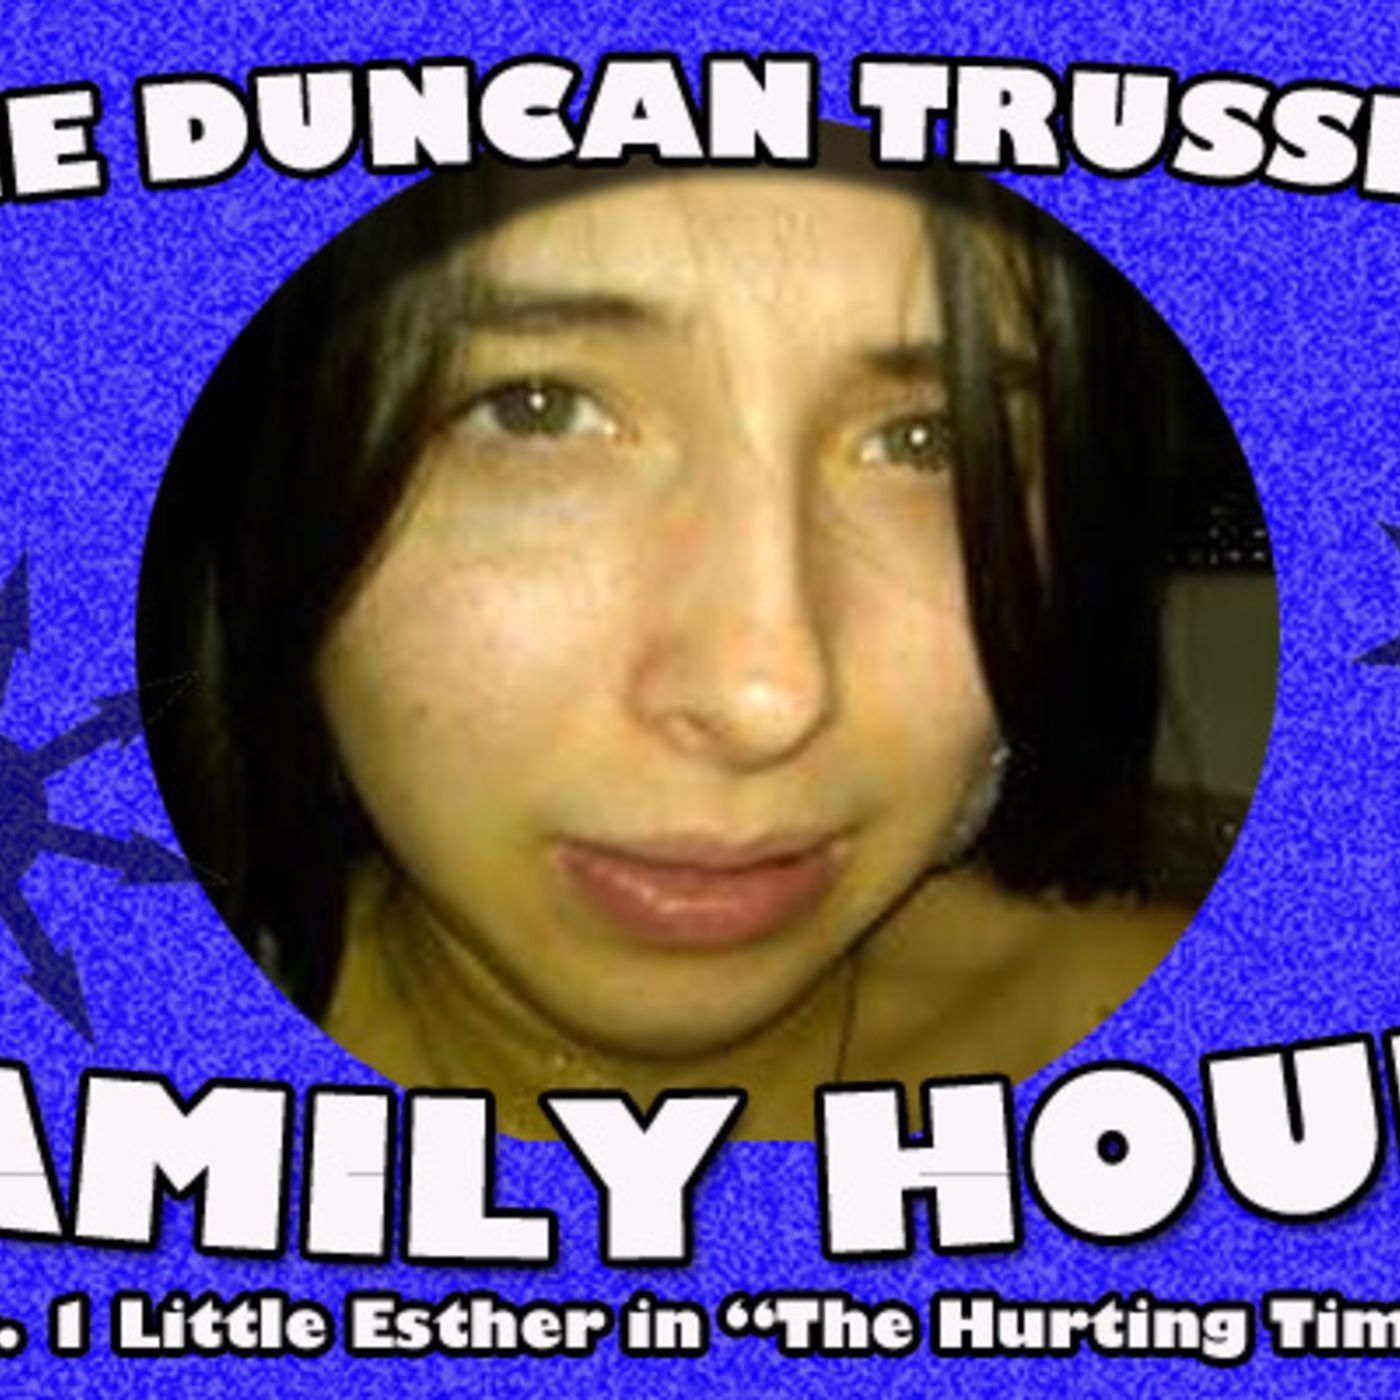 Duncan Trussell Family Hour